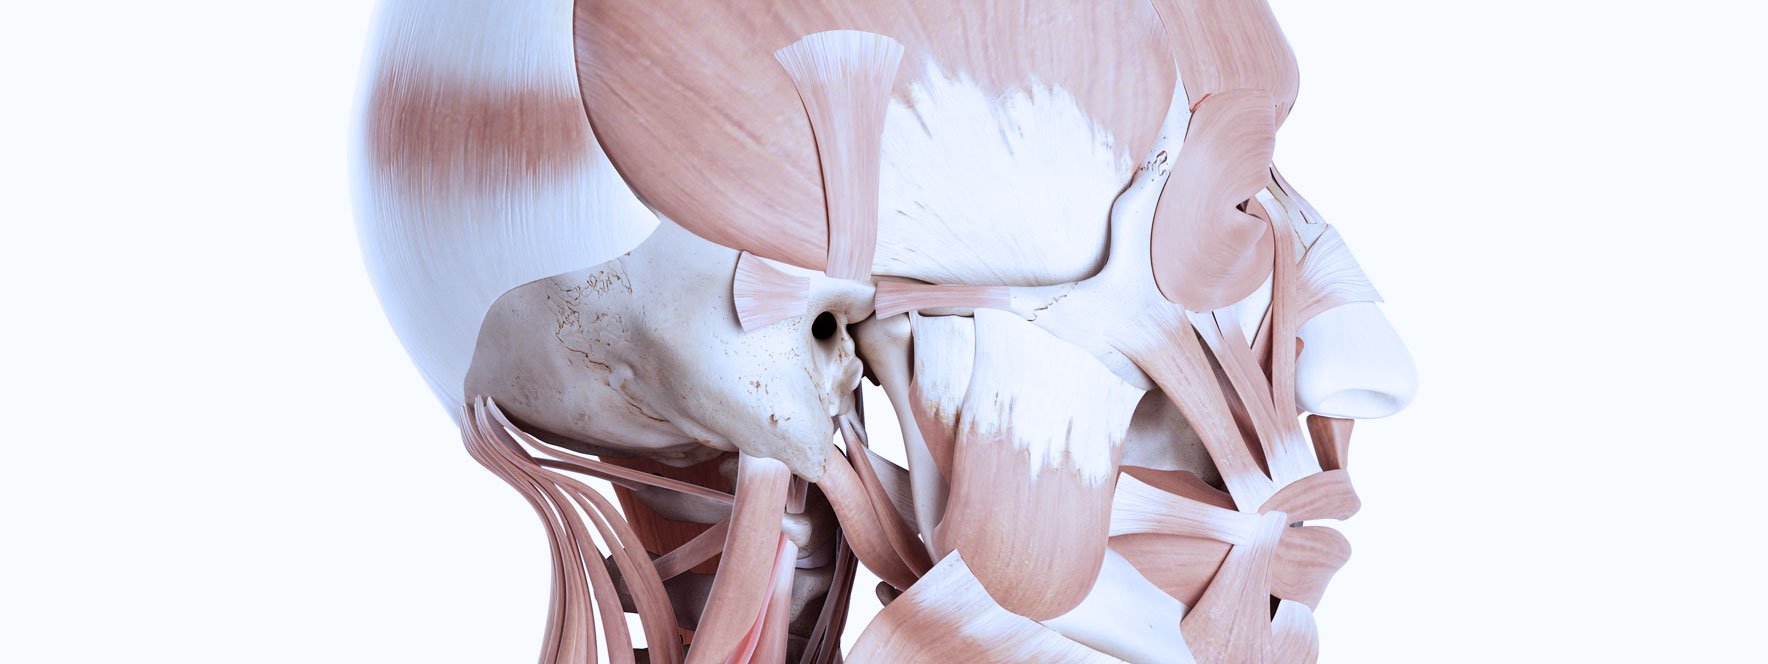 Anatomie de l'articulation temporo-mandibulaire